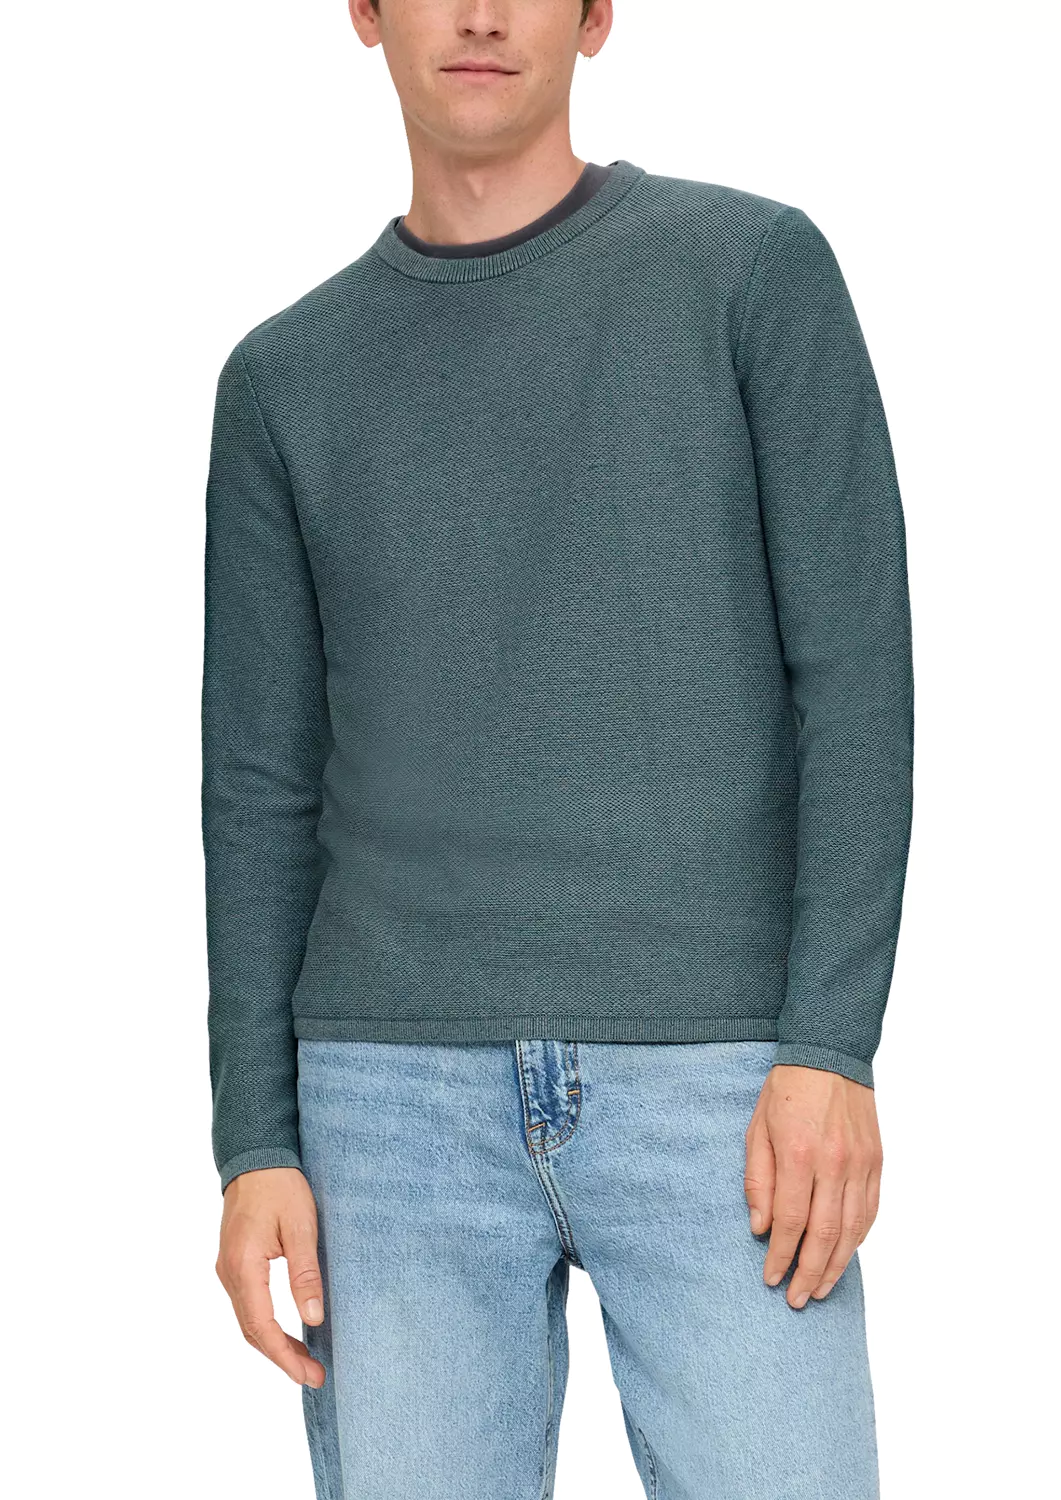 Пуловер мужской QS by s.Oliver 50.3.51.17.170.2134570*63W0*M петроль, размер M